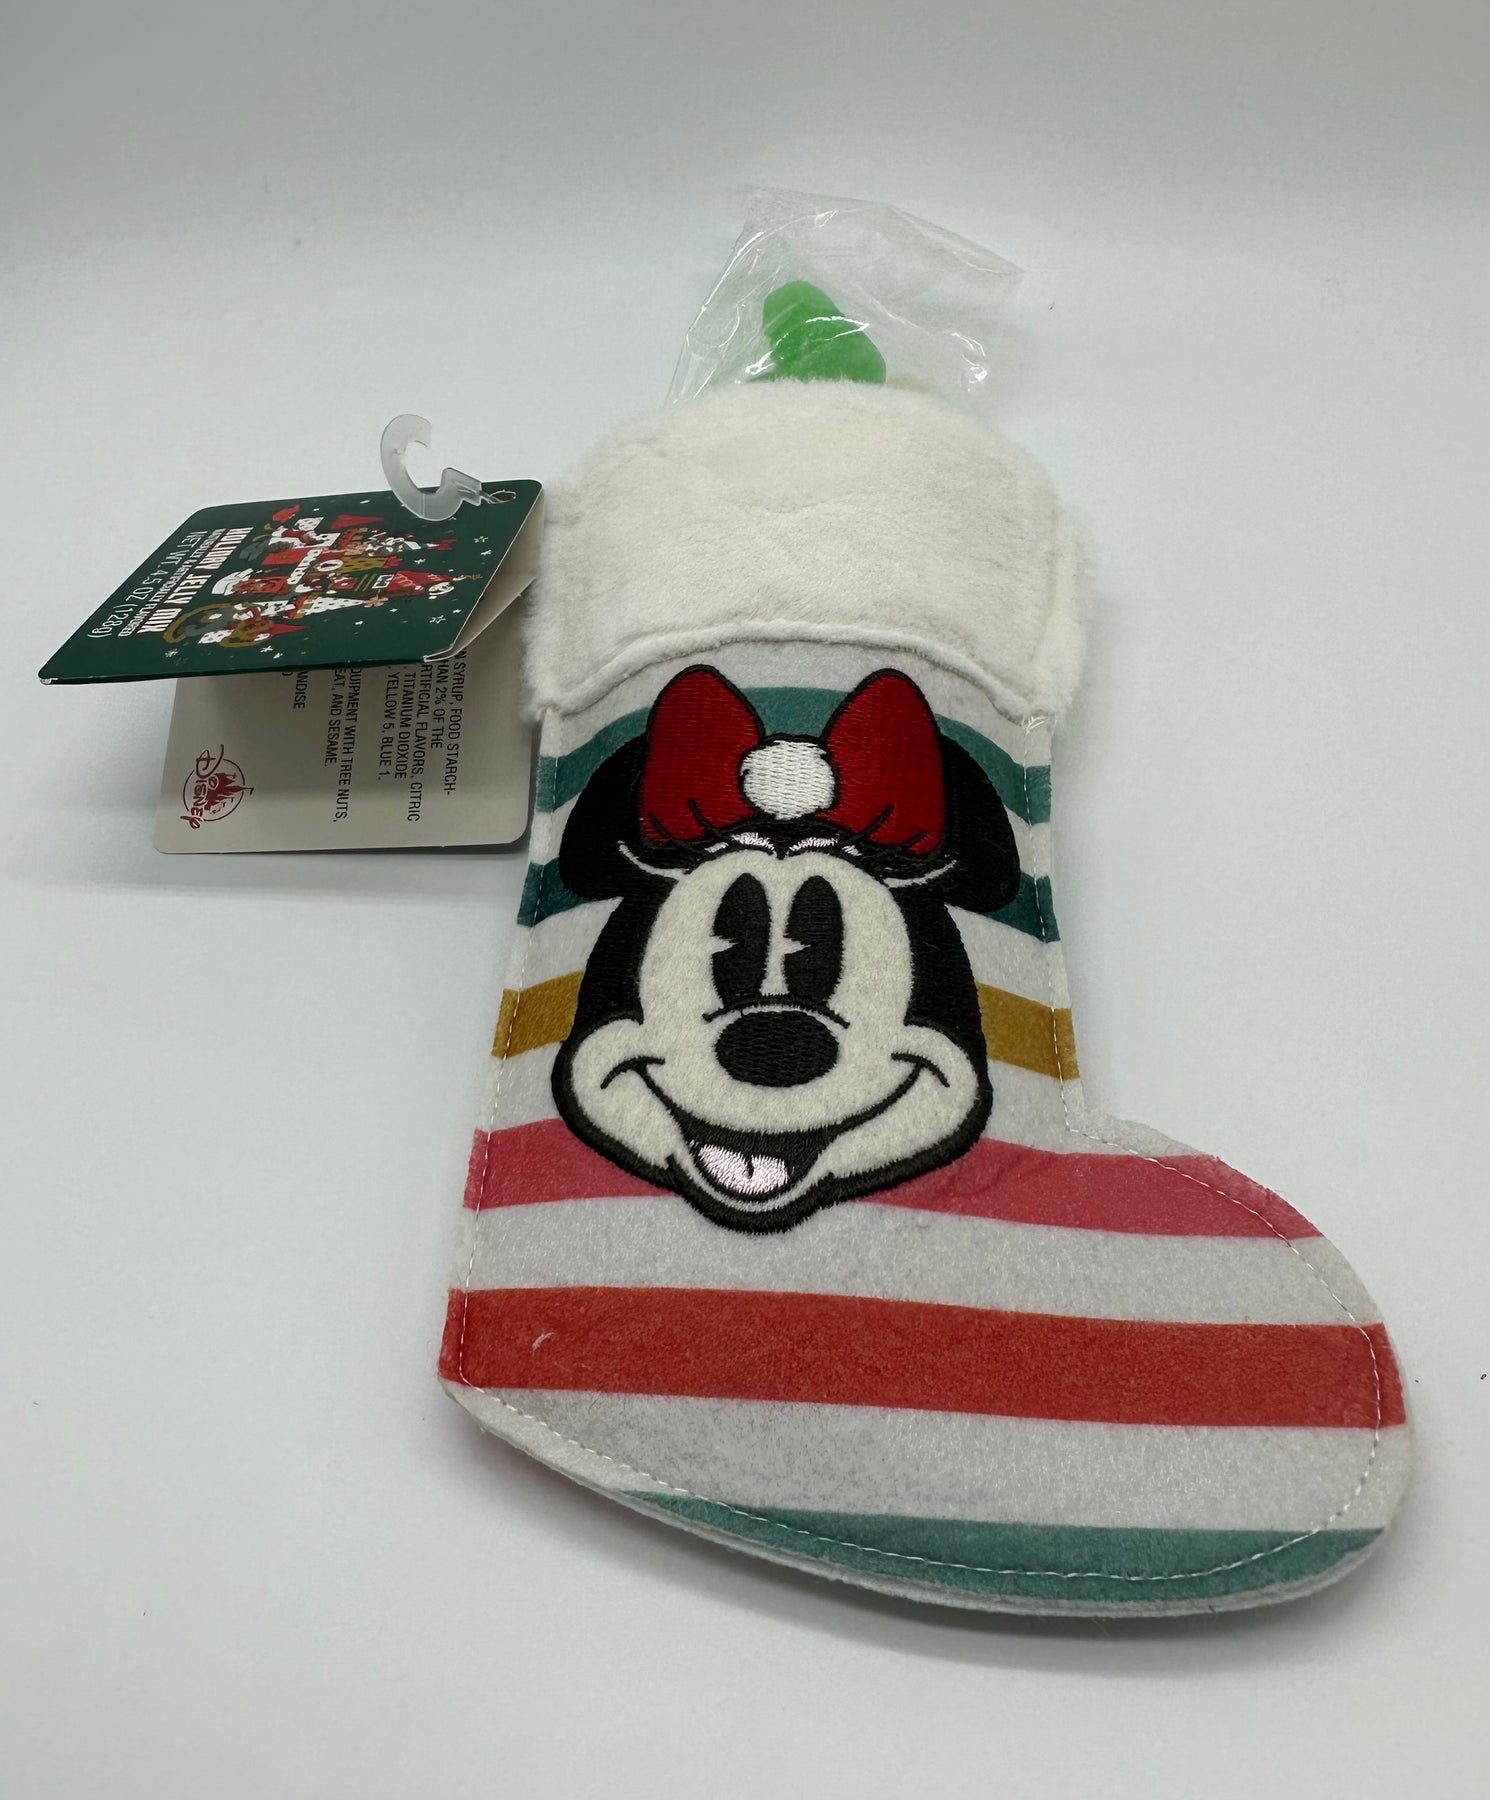 Disney 100 Mickey and Stitch Pixel Art Kit Fused Bead Kit New Sealed